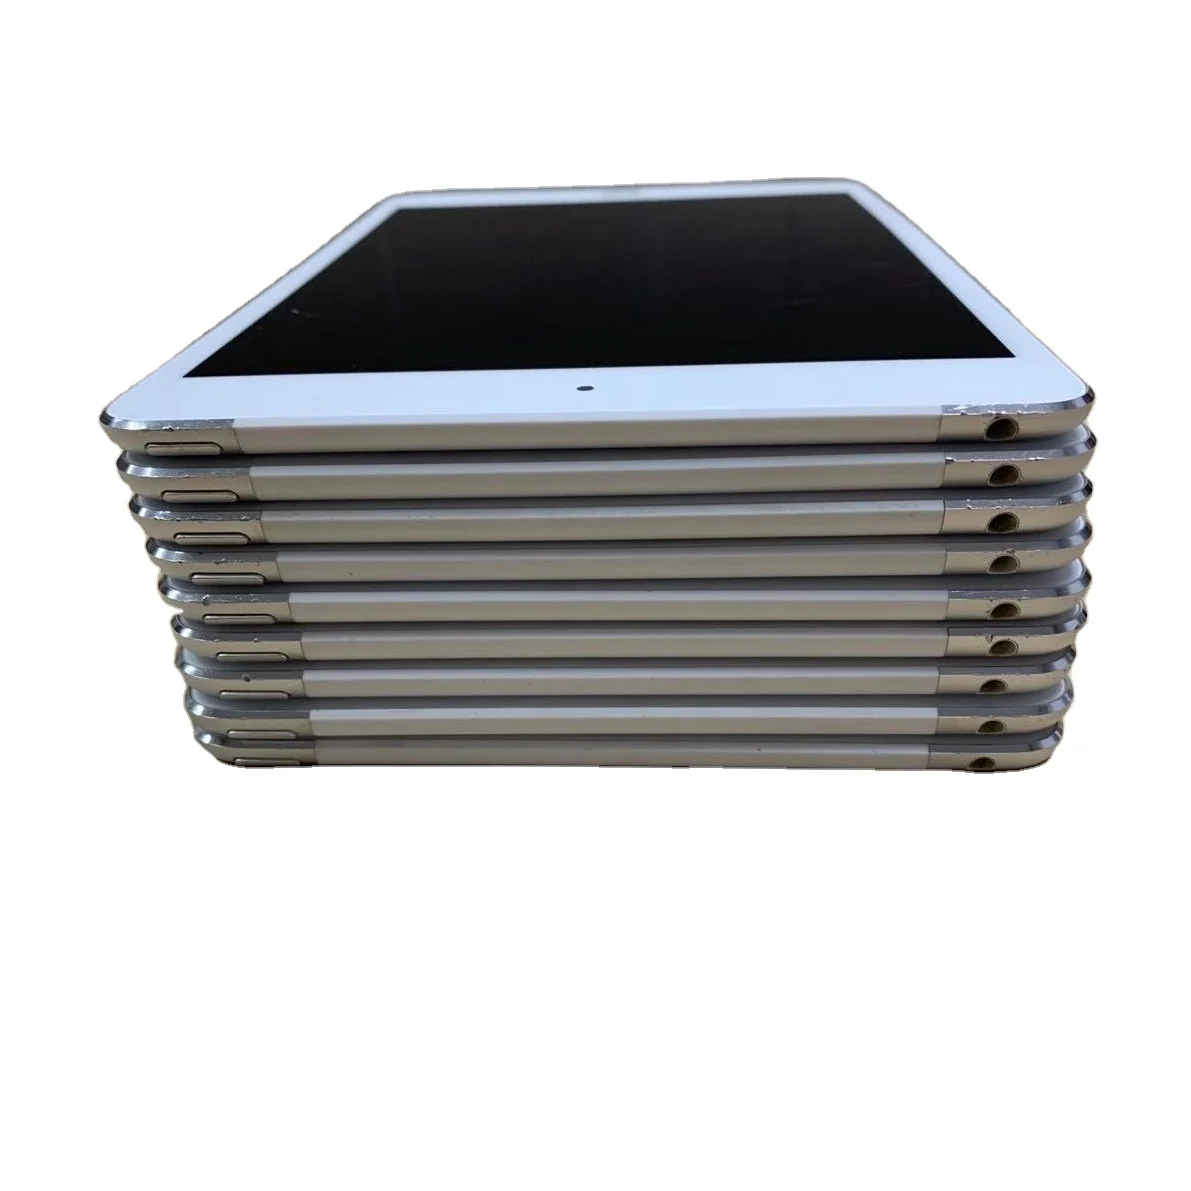 

Wholesale unlocked second hand tablet for iPad Air 1 2 Pro original used tablet for ipad mini 1 2 4 5 16gb 32gb